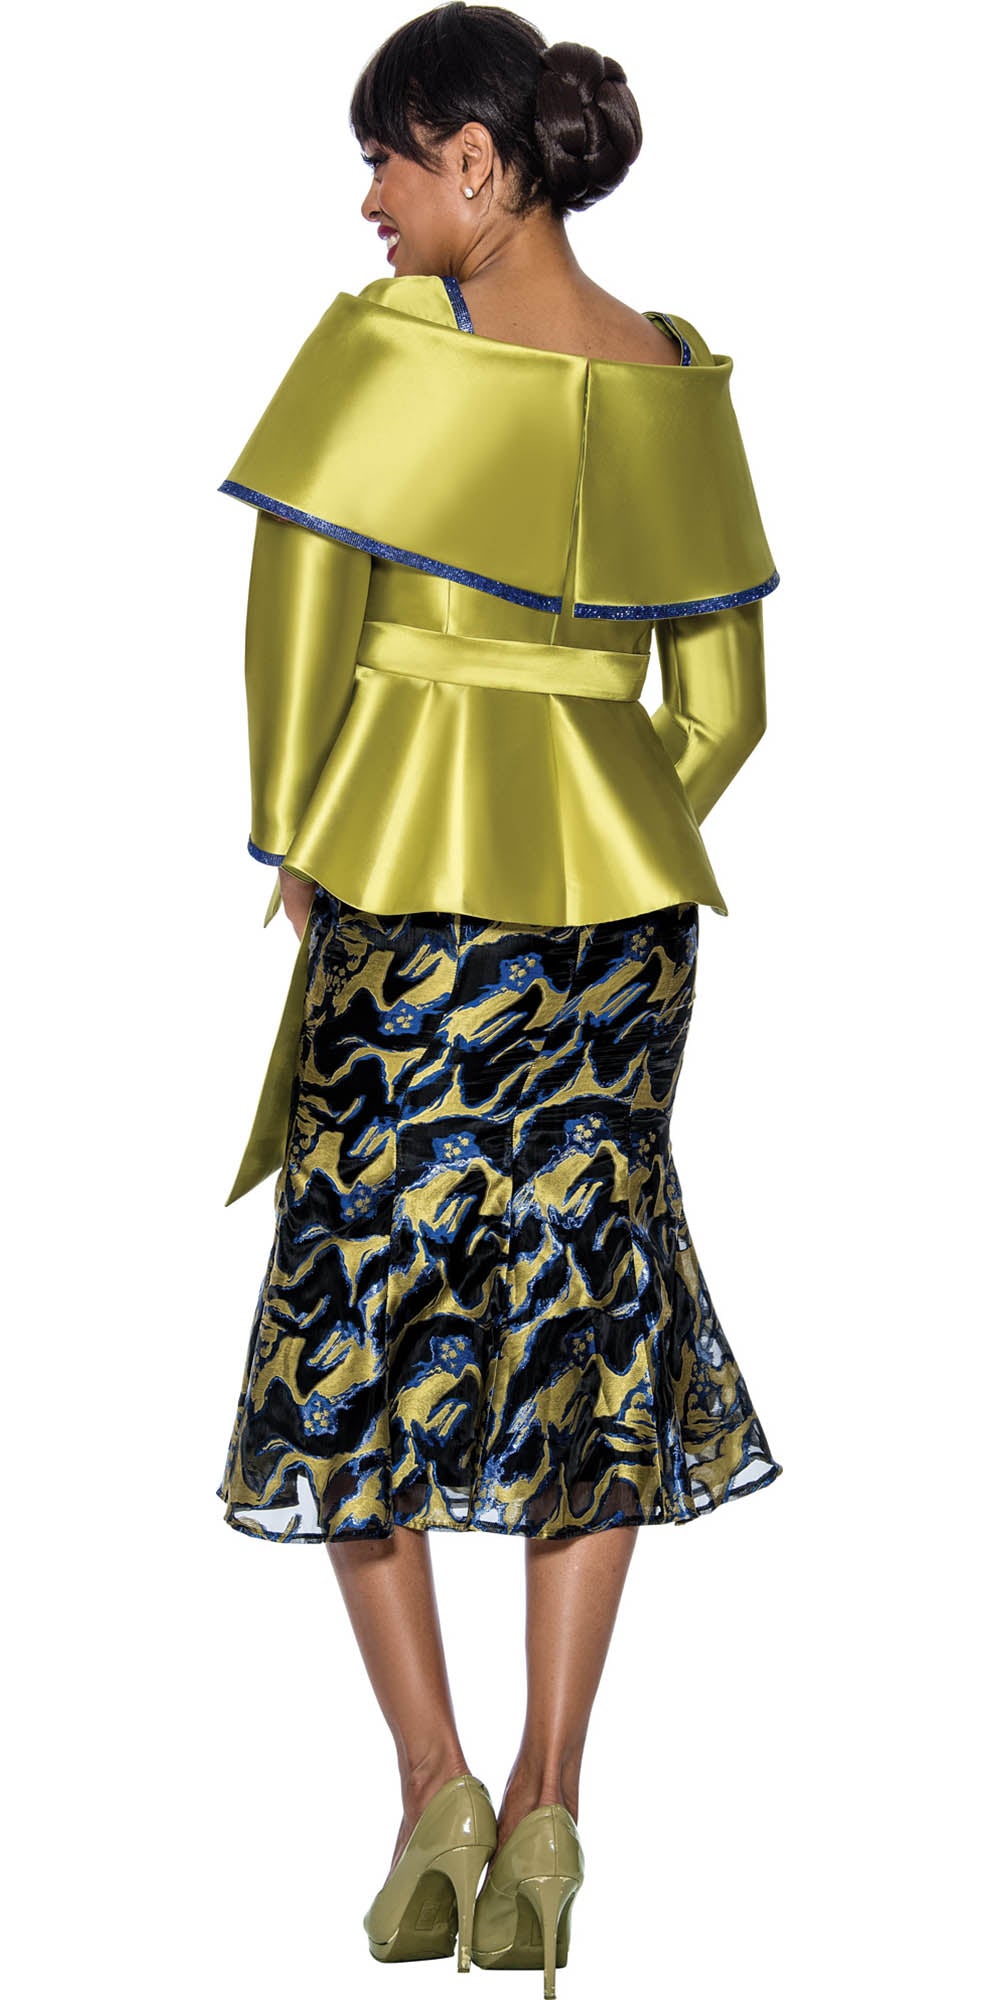 Divine Queen - 2292 - Portrait Collar Print 2pc Skirt Suit